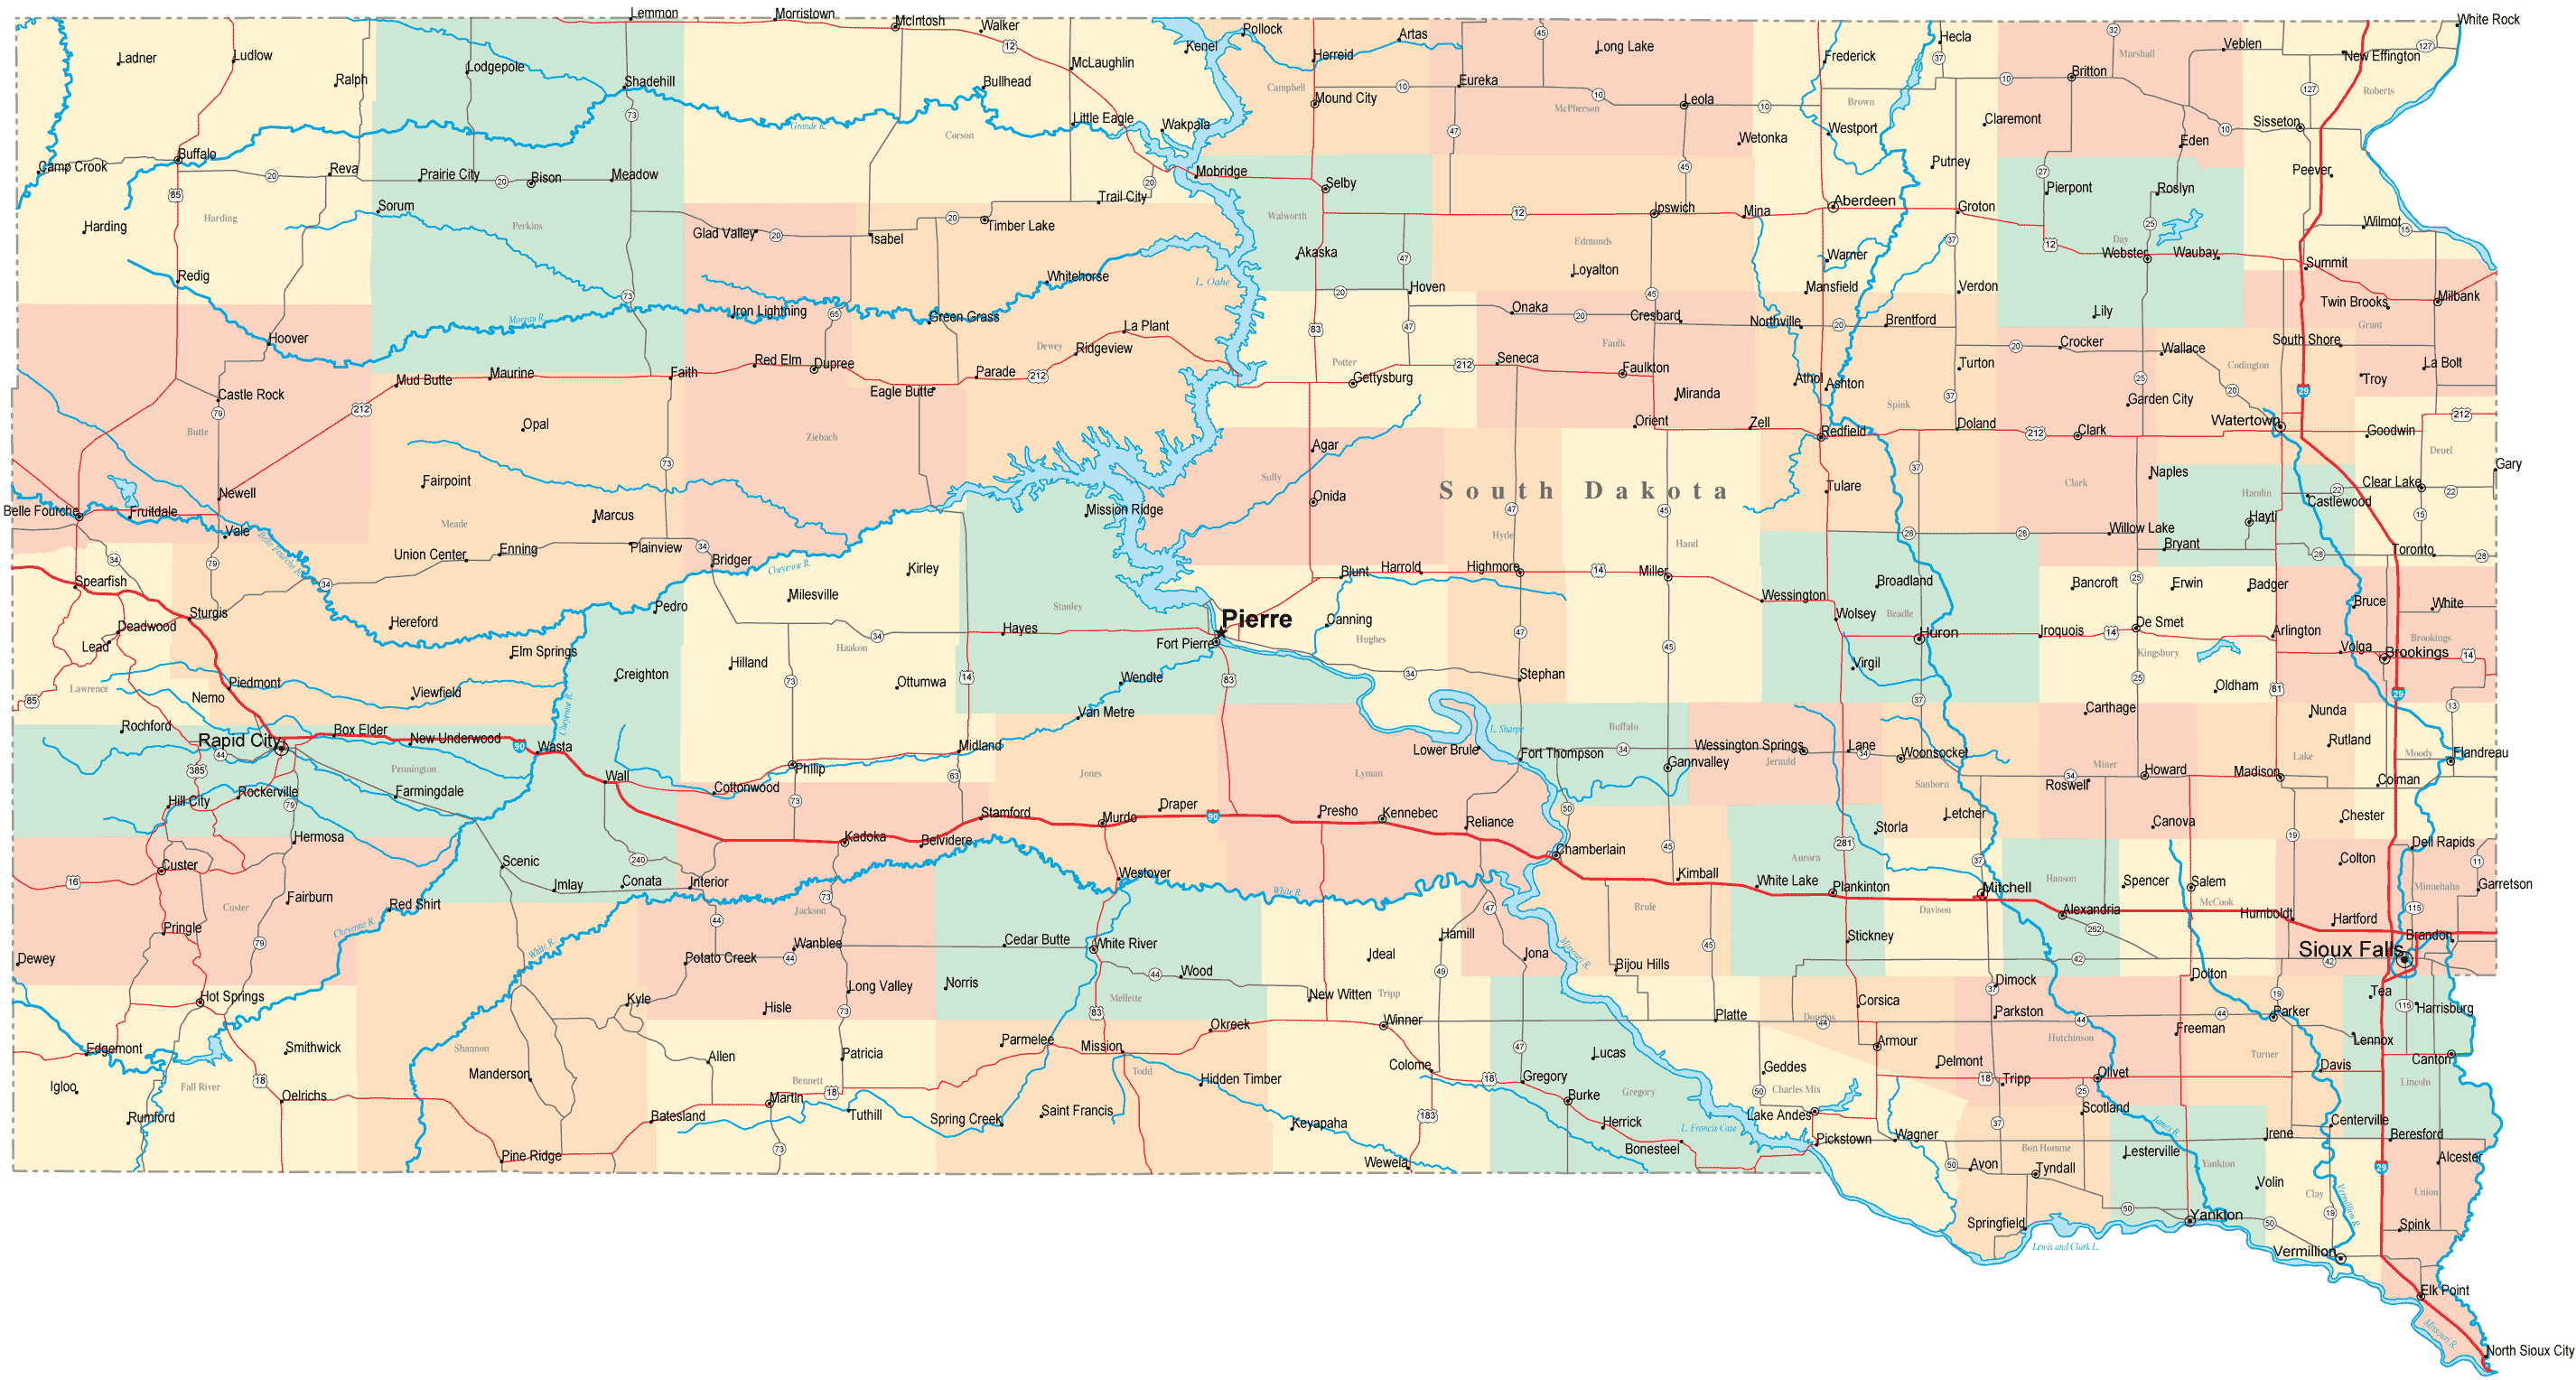 south dakota road conditions map South Dakota Road Map Sd Road Map South Dakota Highway Map south dakota road conditions map